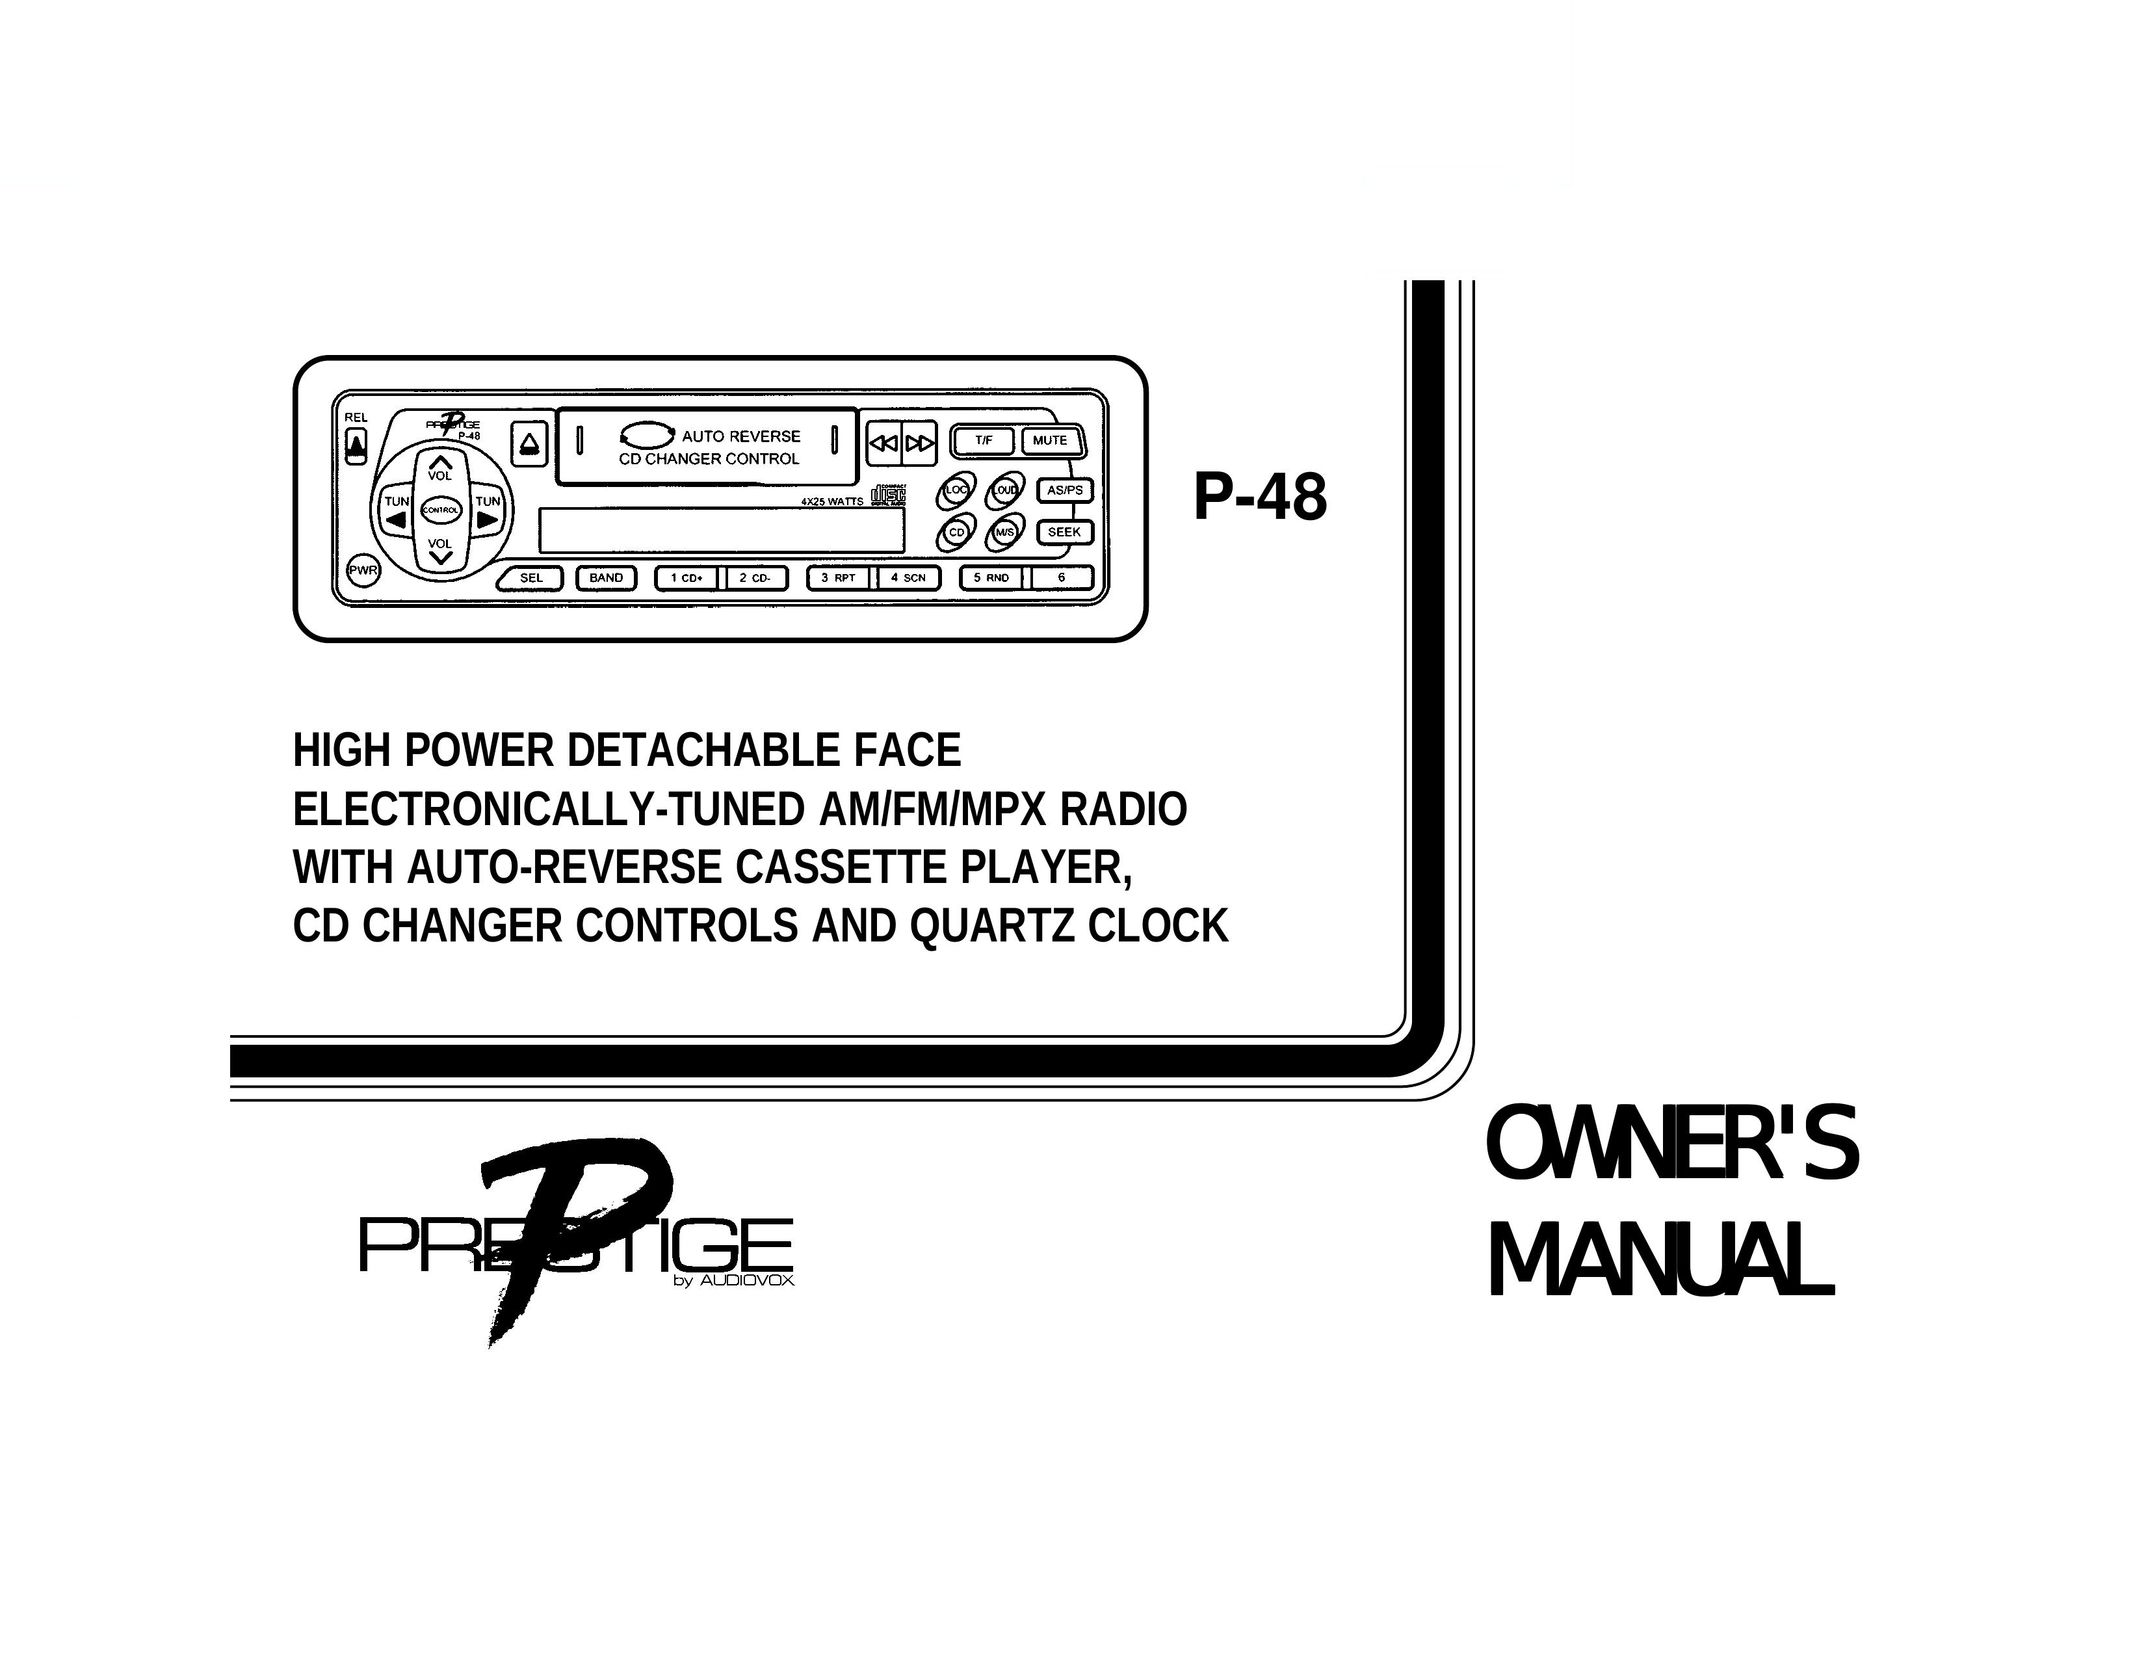 Audiovox P-48 CD Player User Manual